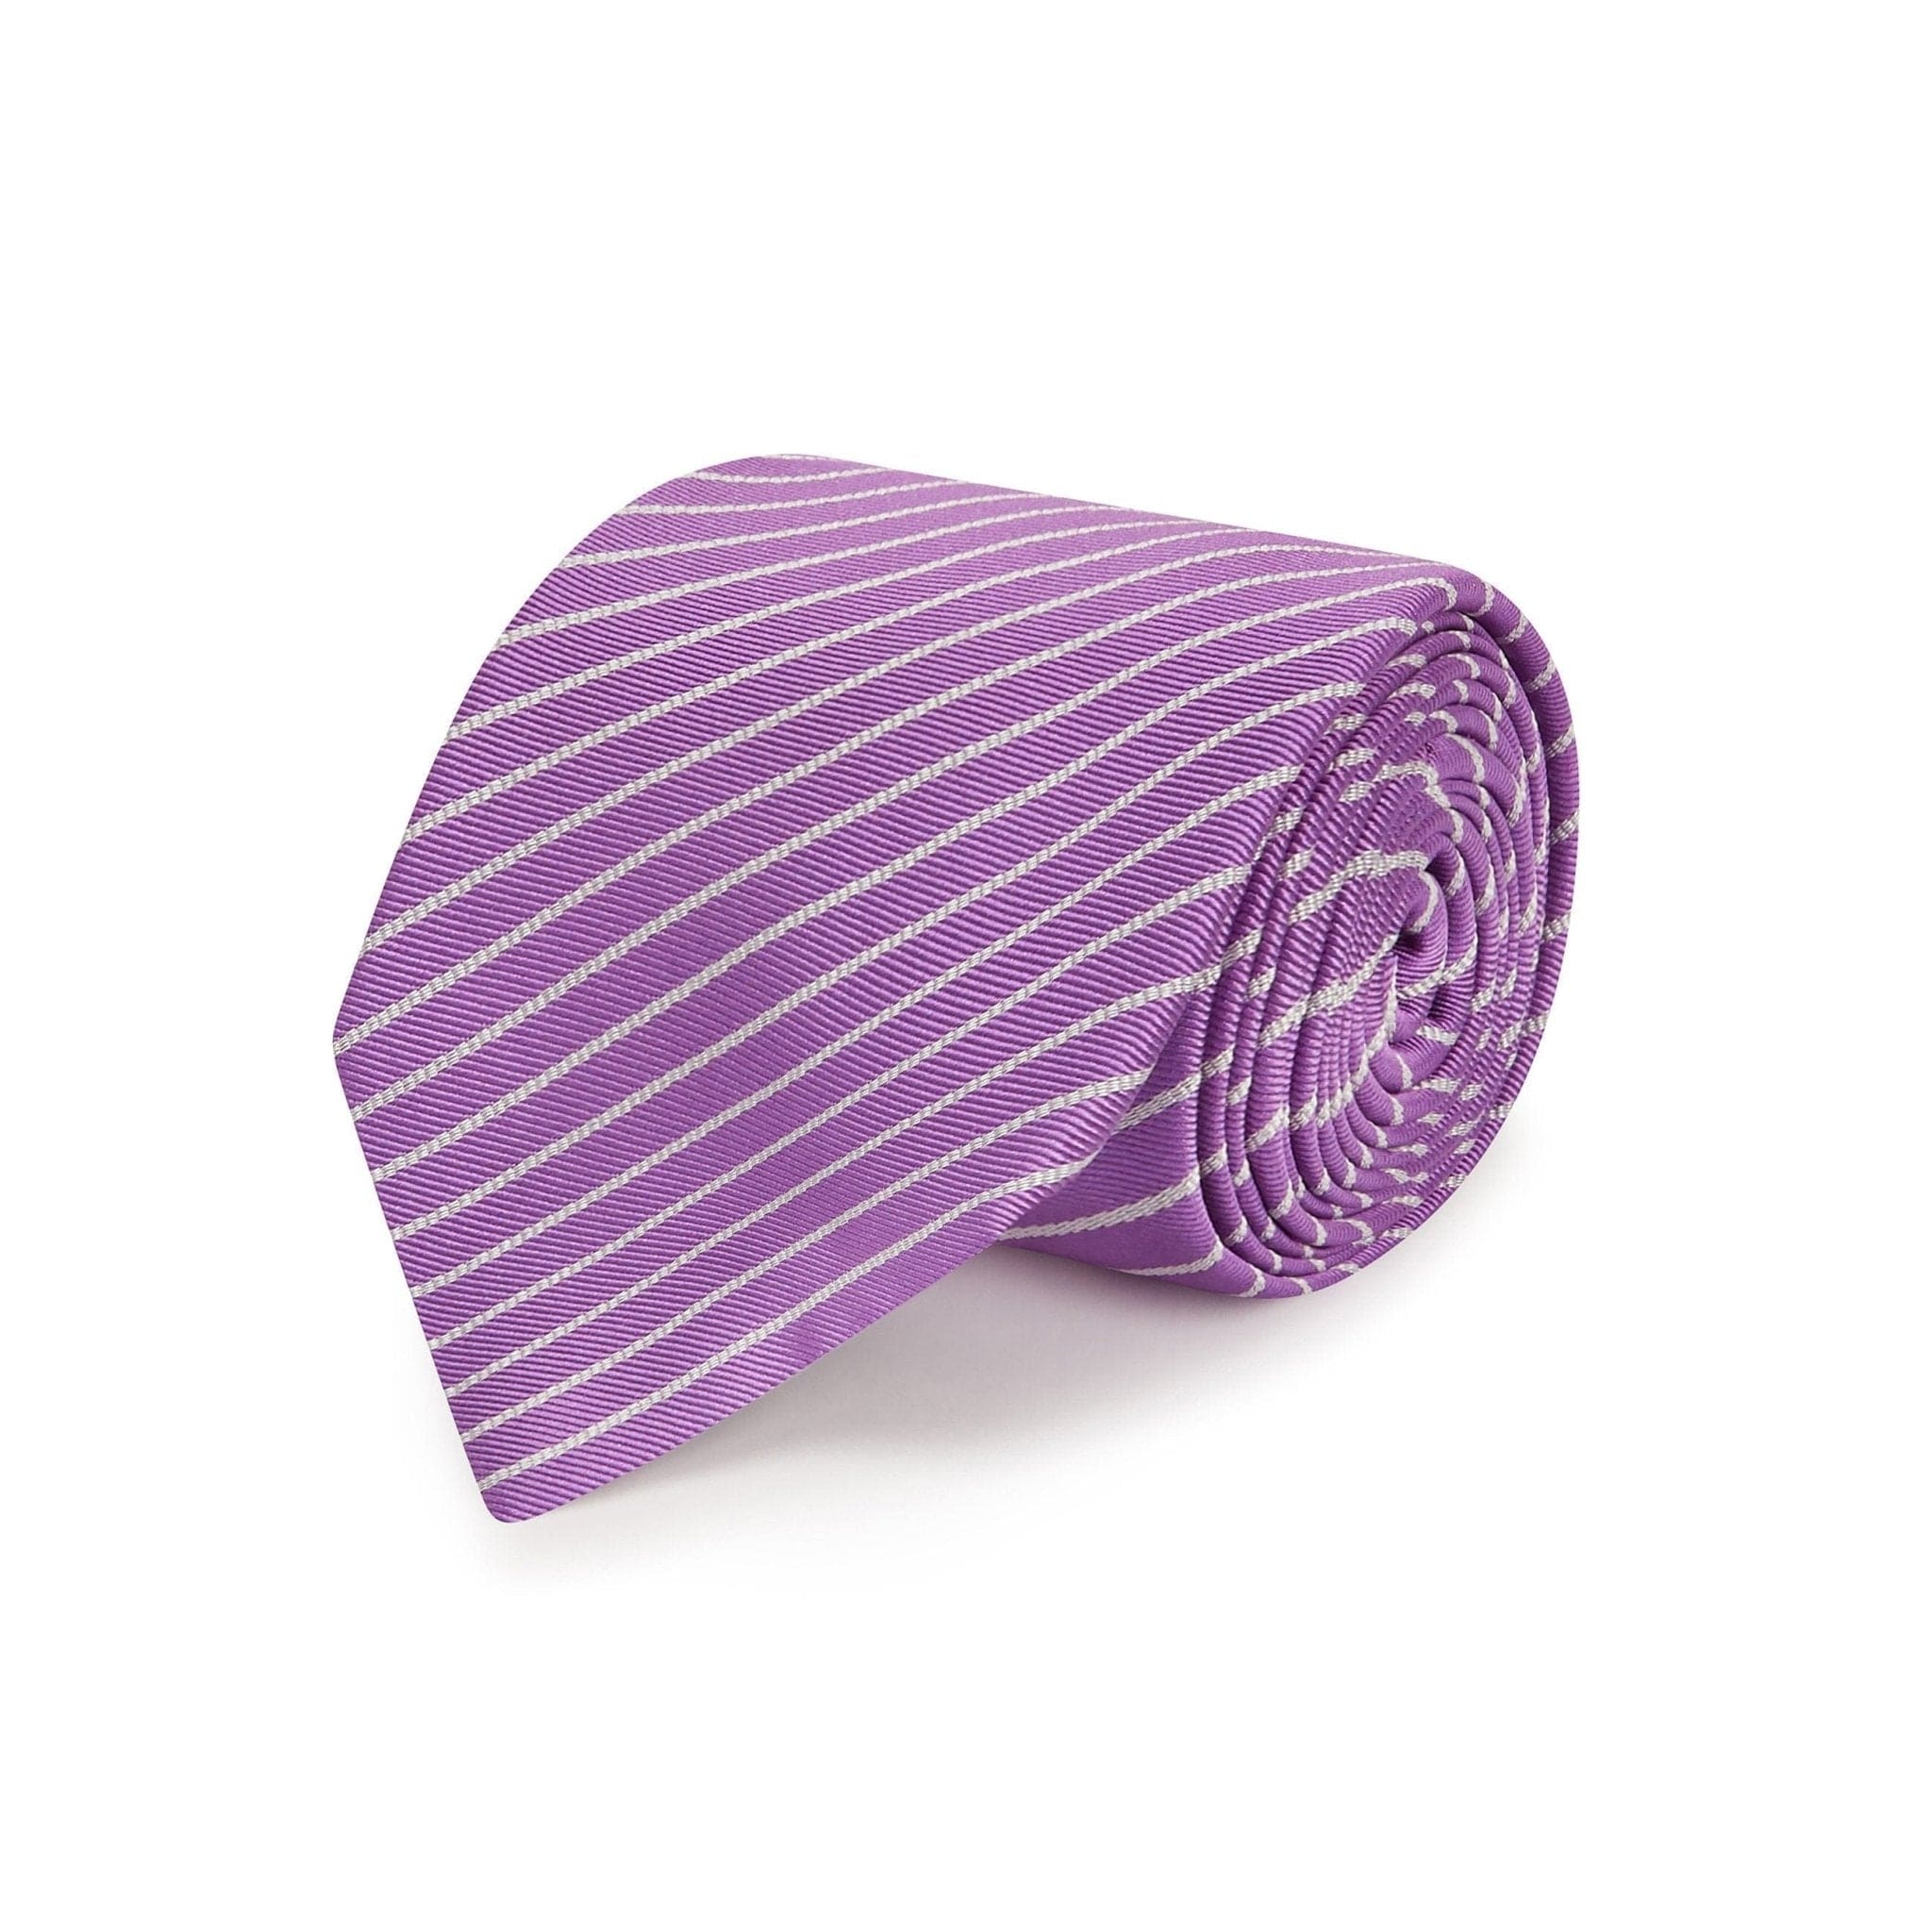 Lilac & White Stripes Woven Silk Tie